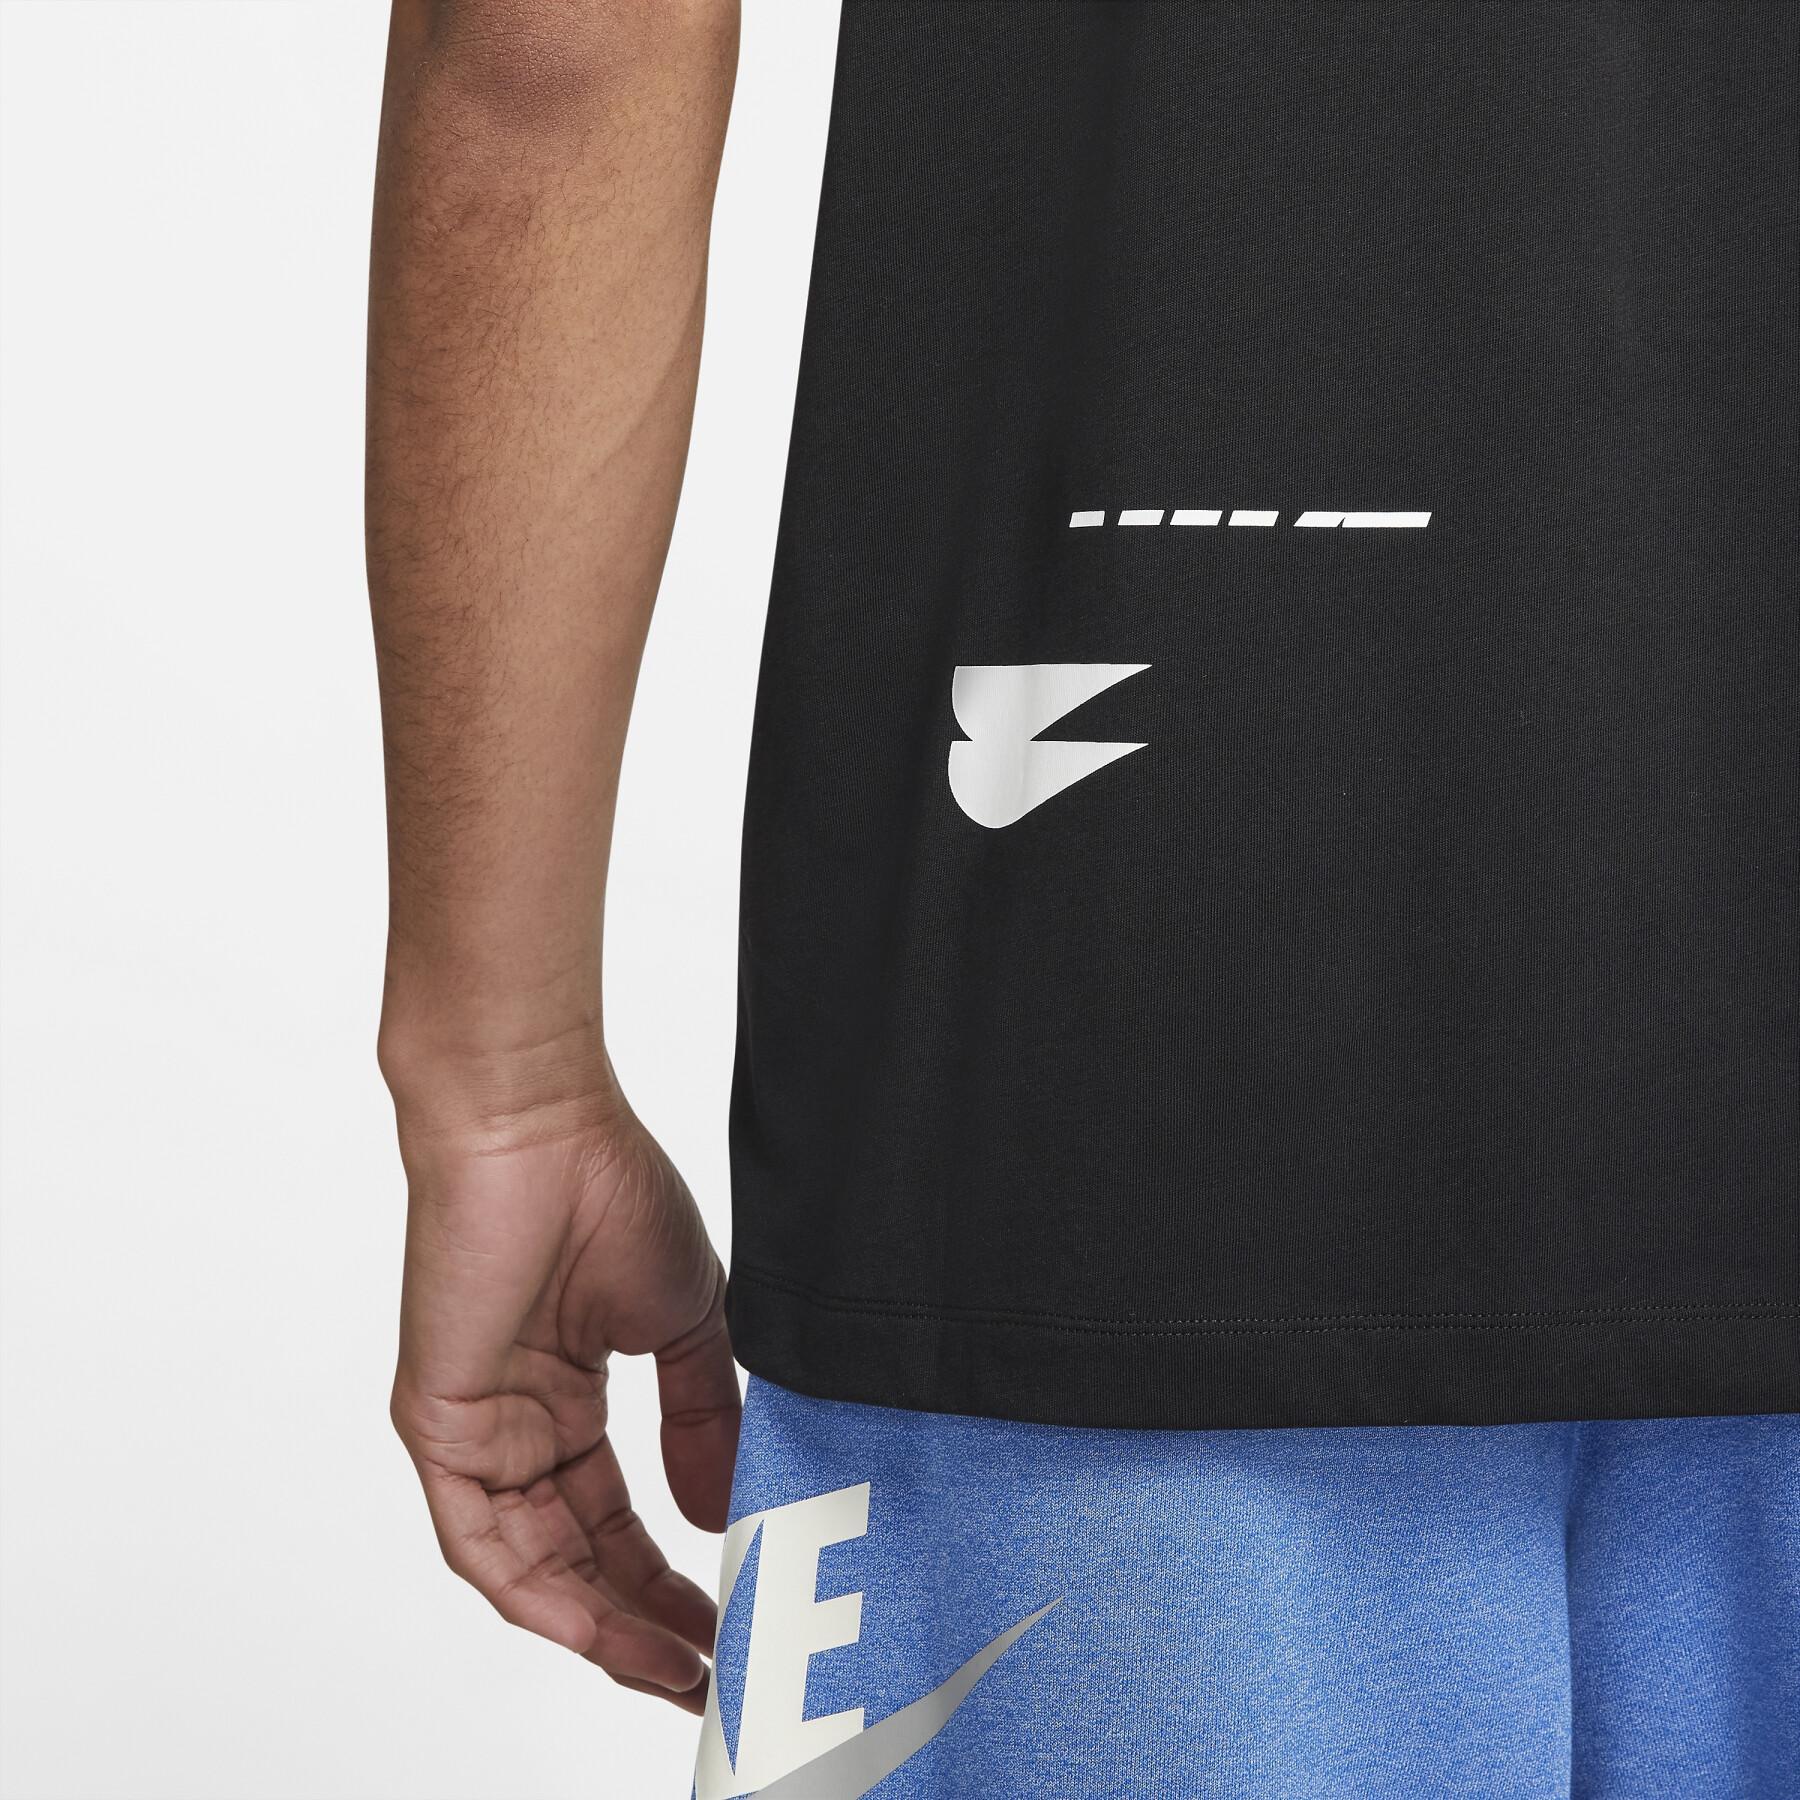 T-Shirt Nike Essentials + Sport 1